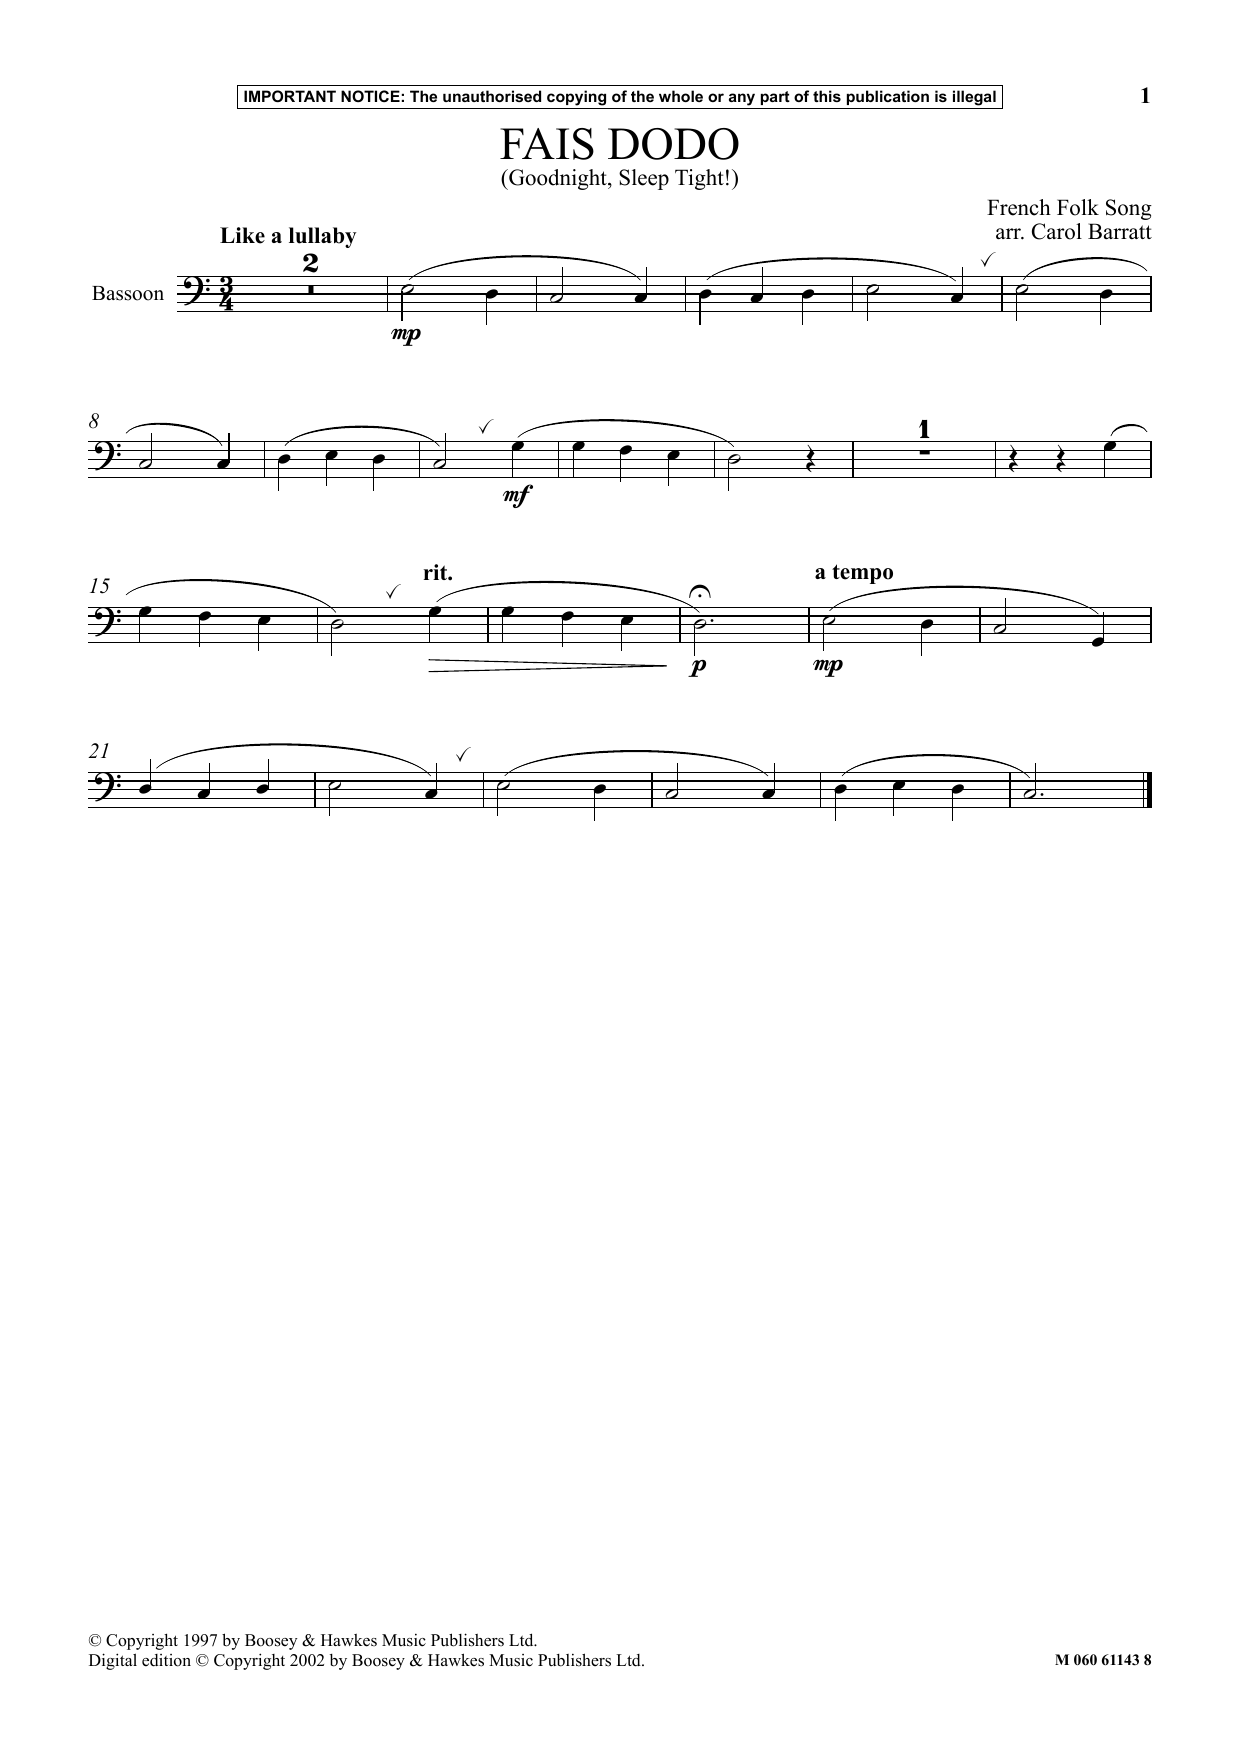 Carol Barratt Fais Dodo (Goodnight, Sleep Tight) Sheet Music Notes & Chords for Instrumental Solo - Download or Print PDF